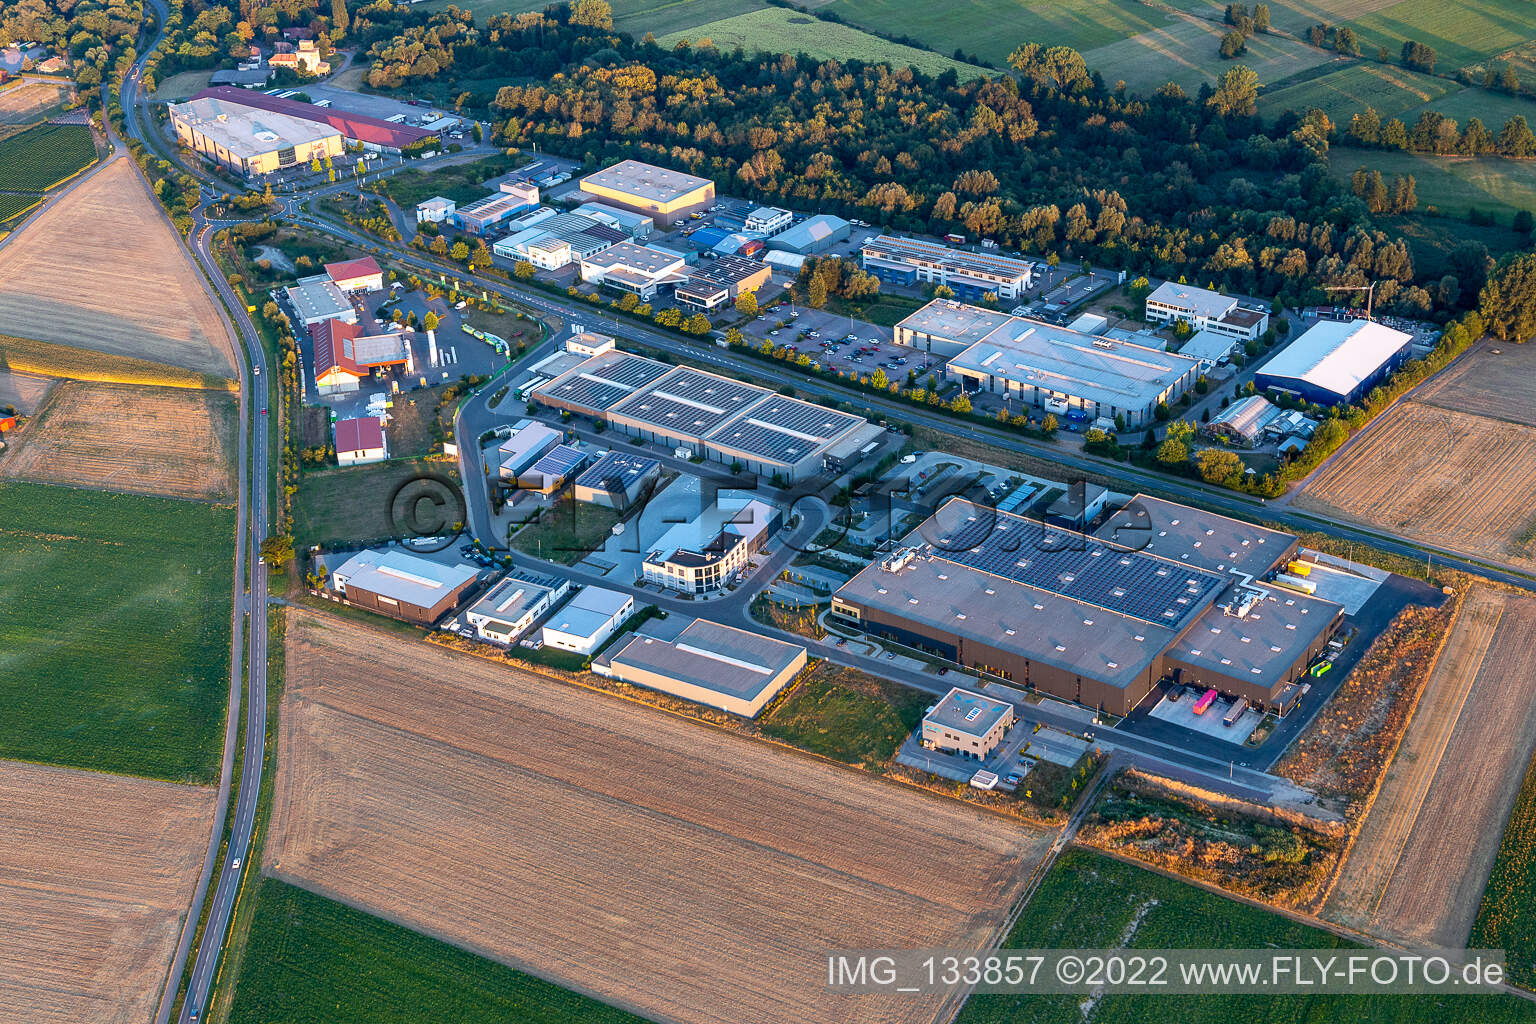 Aerial view of Heo GmbH in the district Herxheim in Herxheim bei Landau/Pfalz in the state Rhineland-Palatinate, Germany